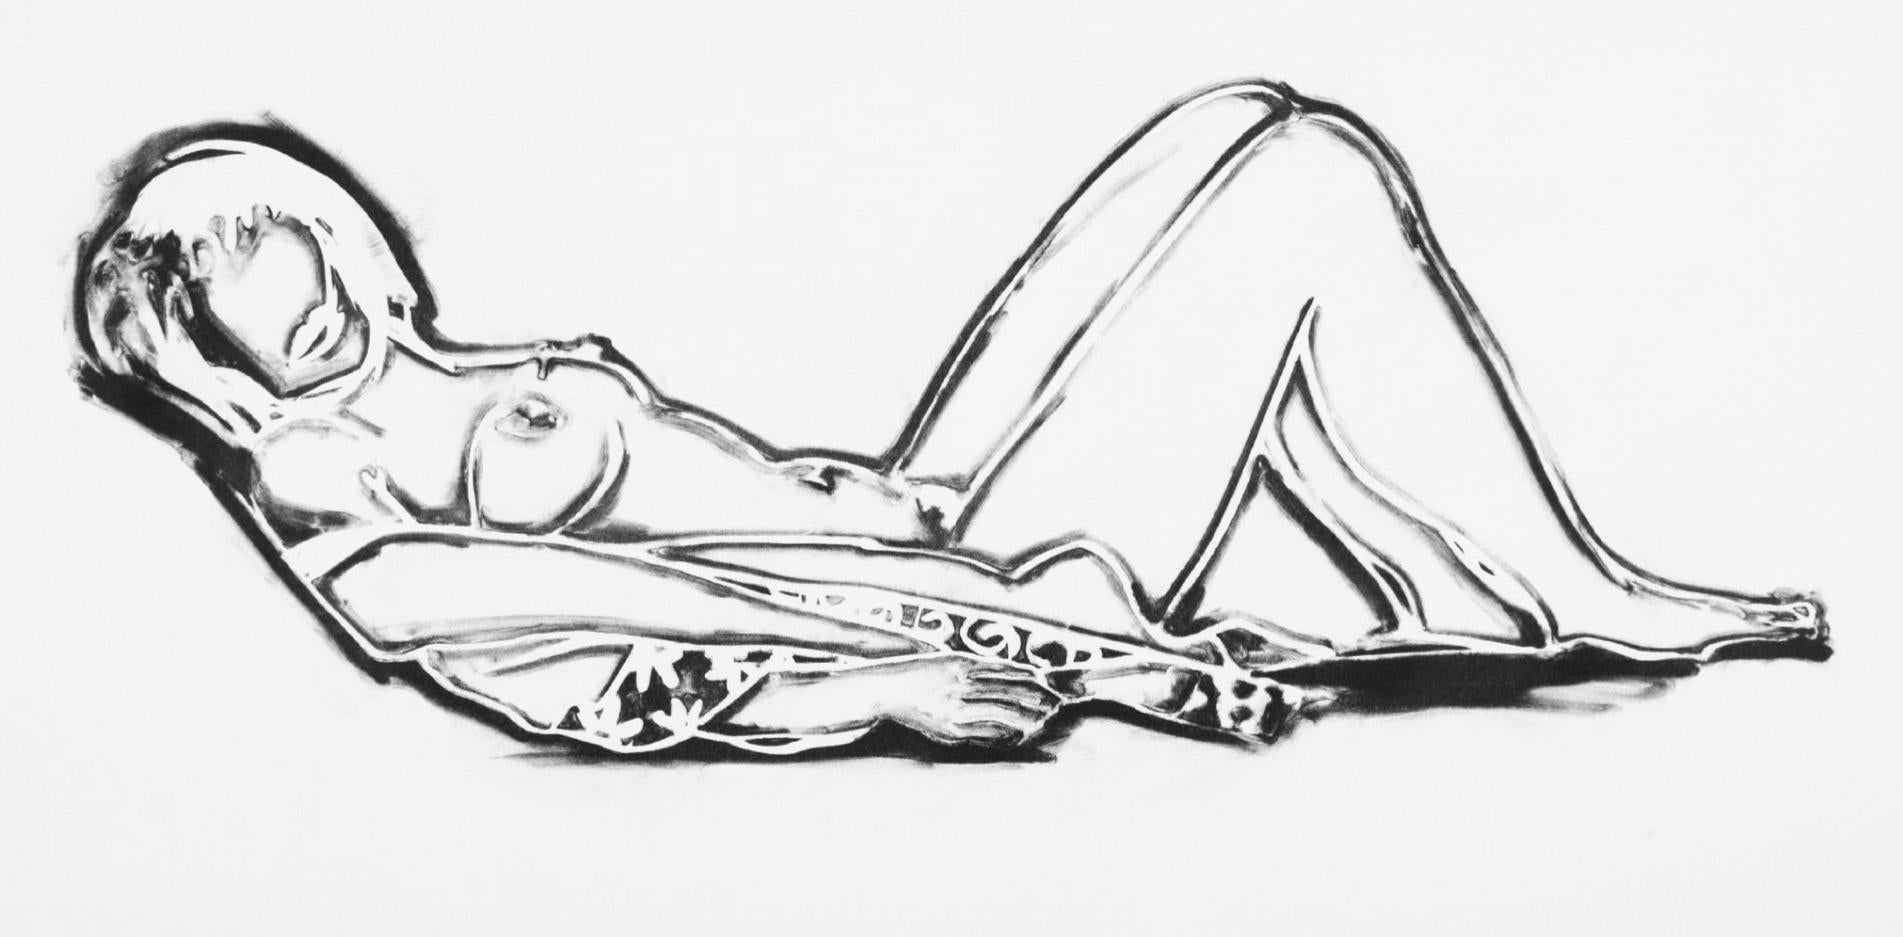 Tom Wesselmann Nude Print – MONICA LIEGT AUF DEM BADEMANTEL